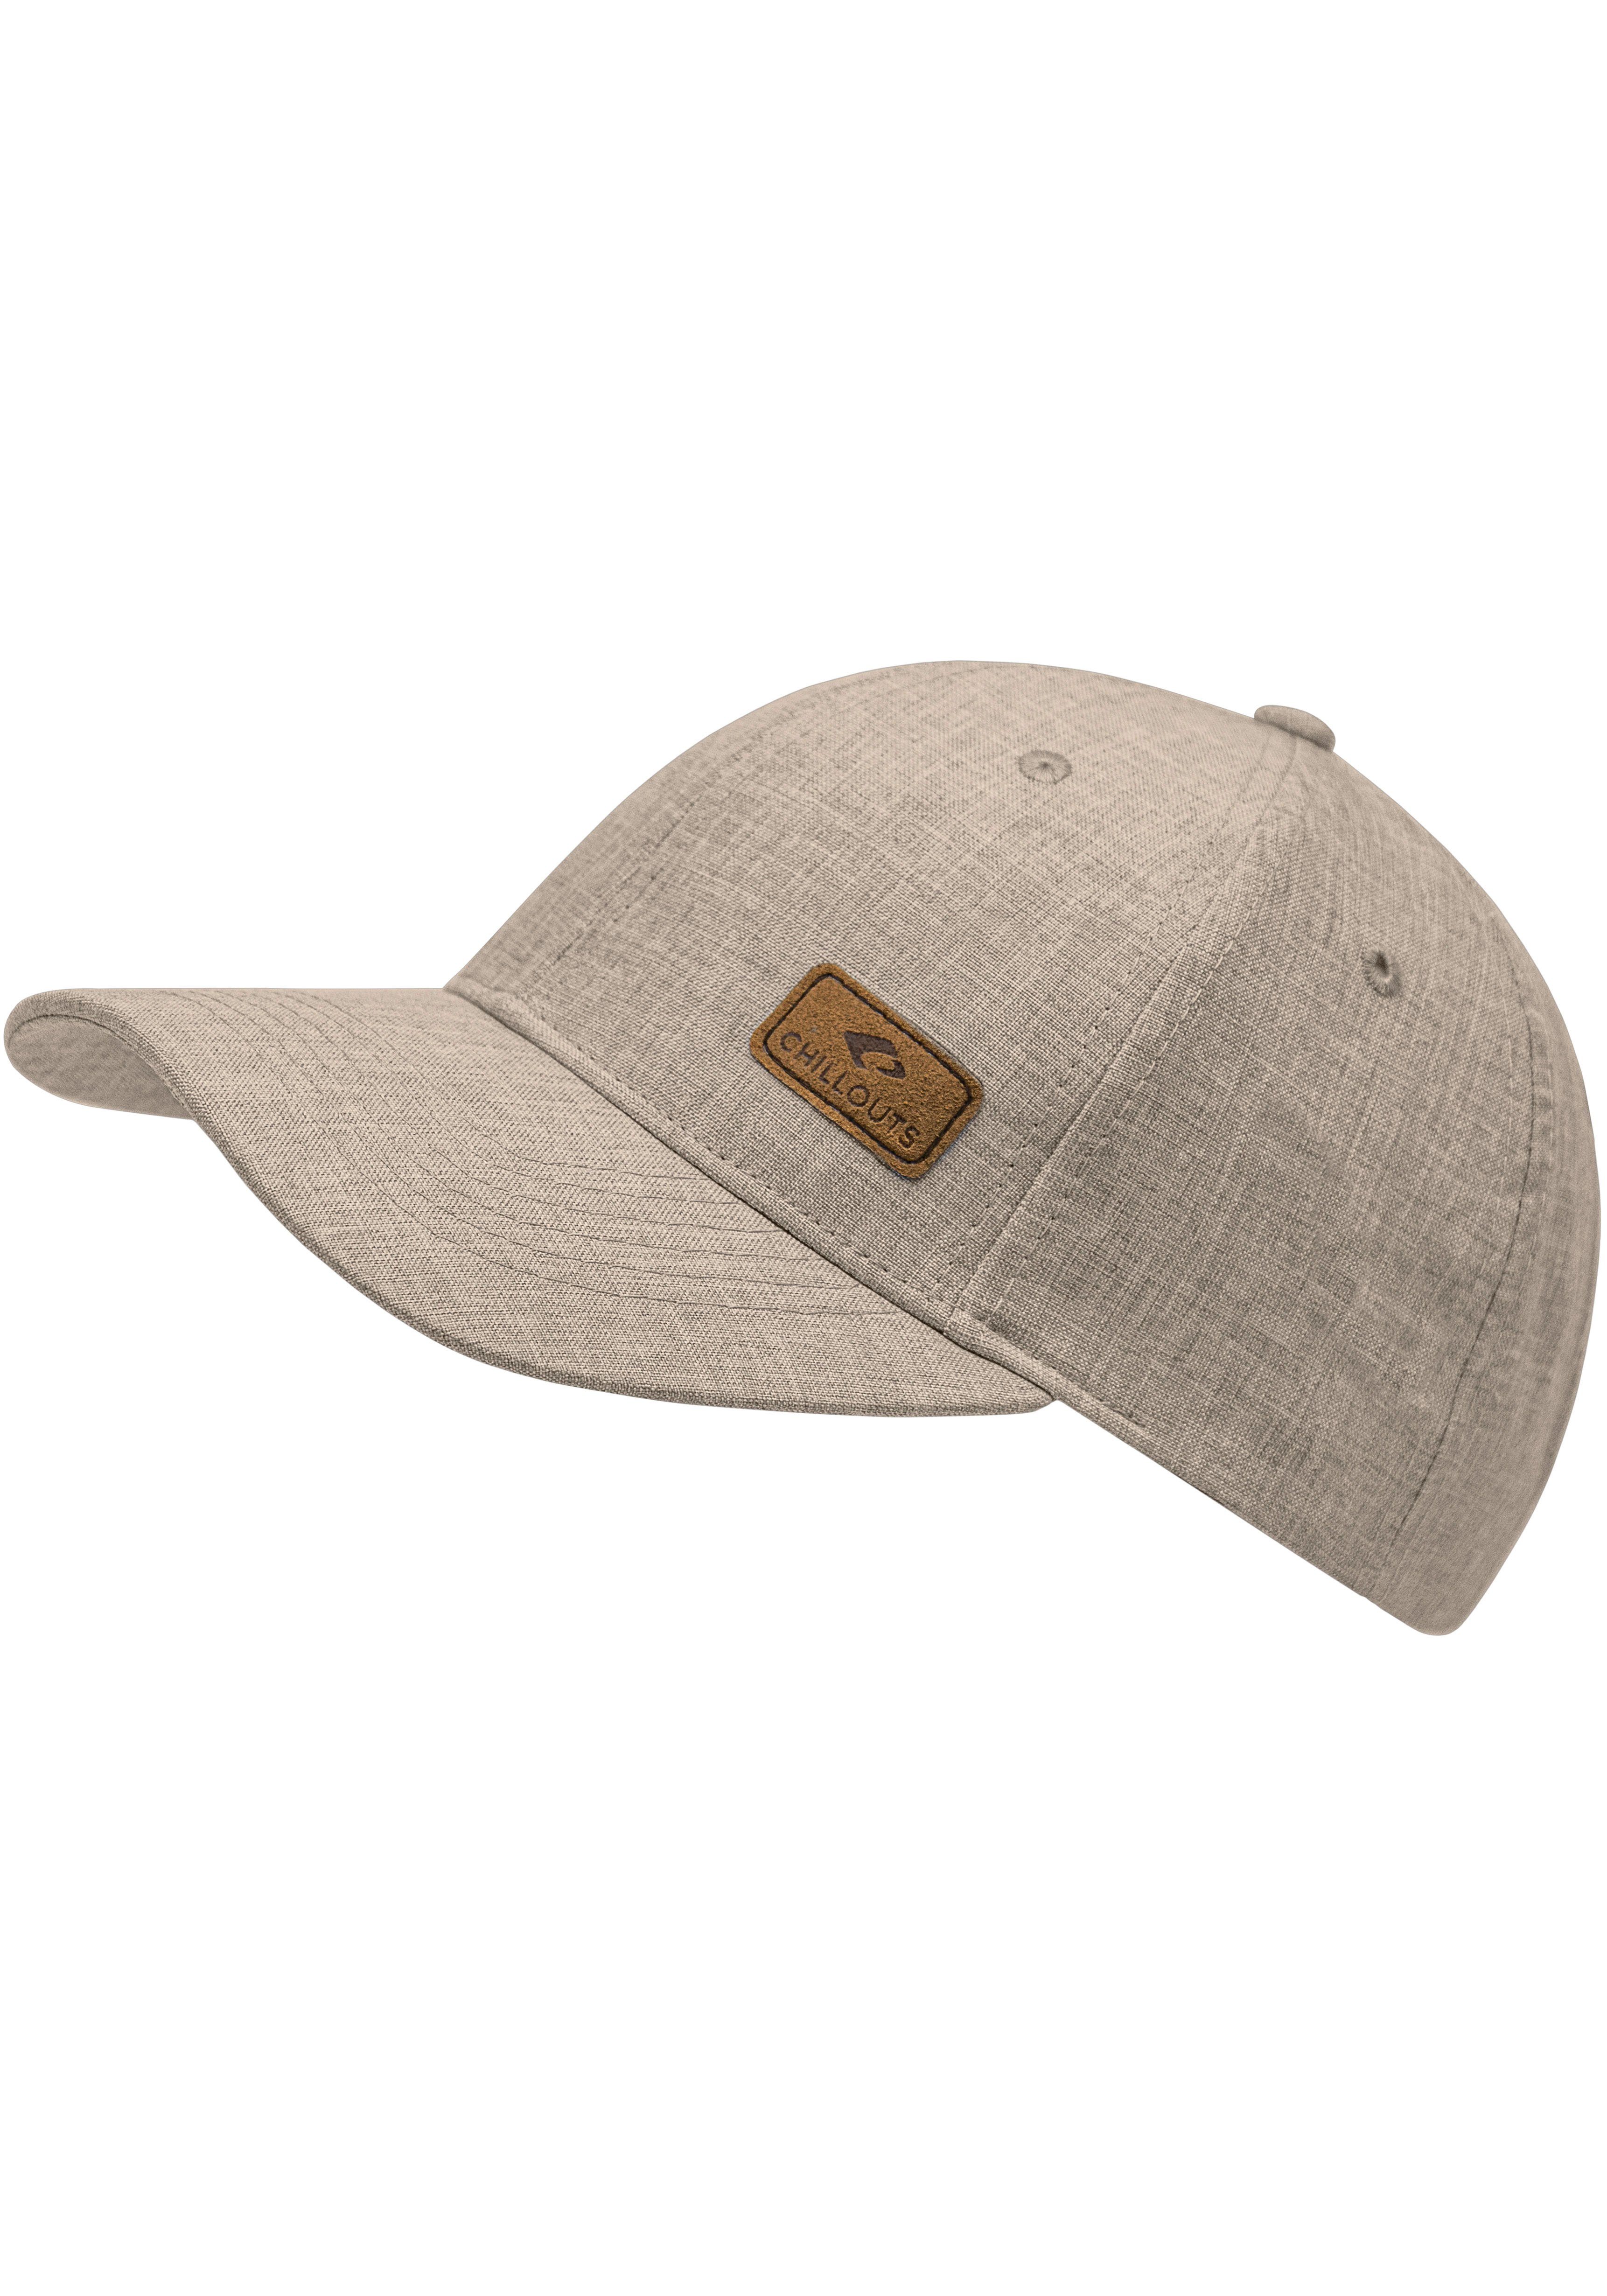 chillouts Baseball Cap Amadora Hat in melierter Optik, One Size, verstellbar beige | Baseball Caps